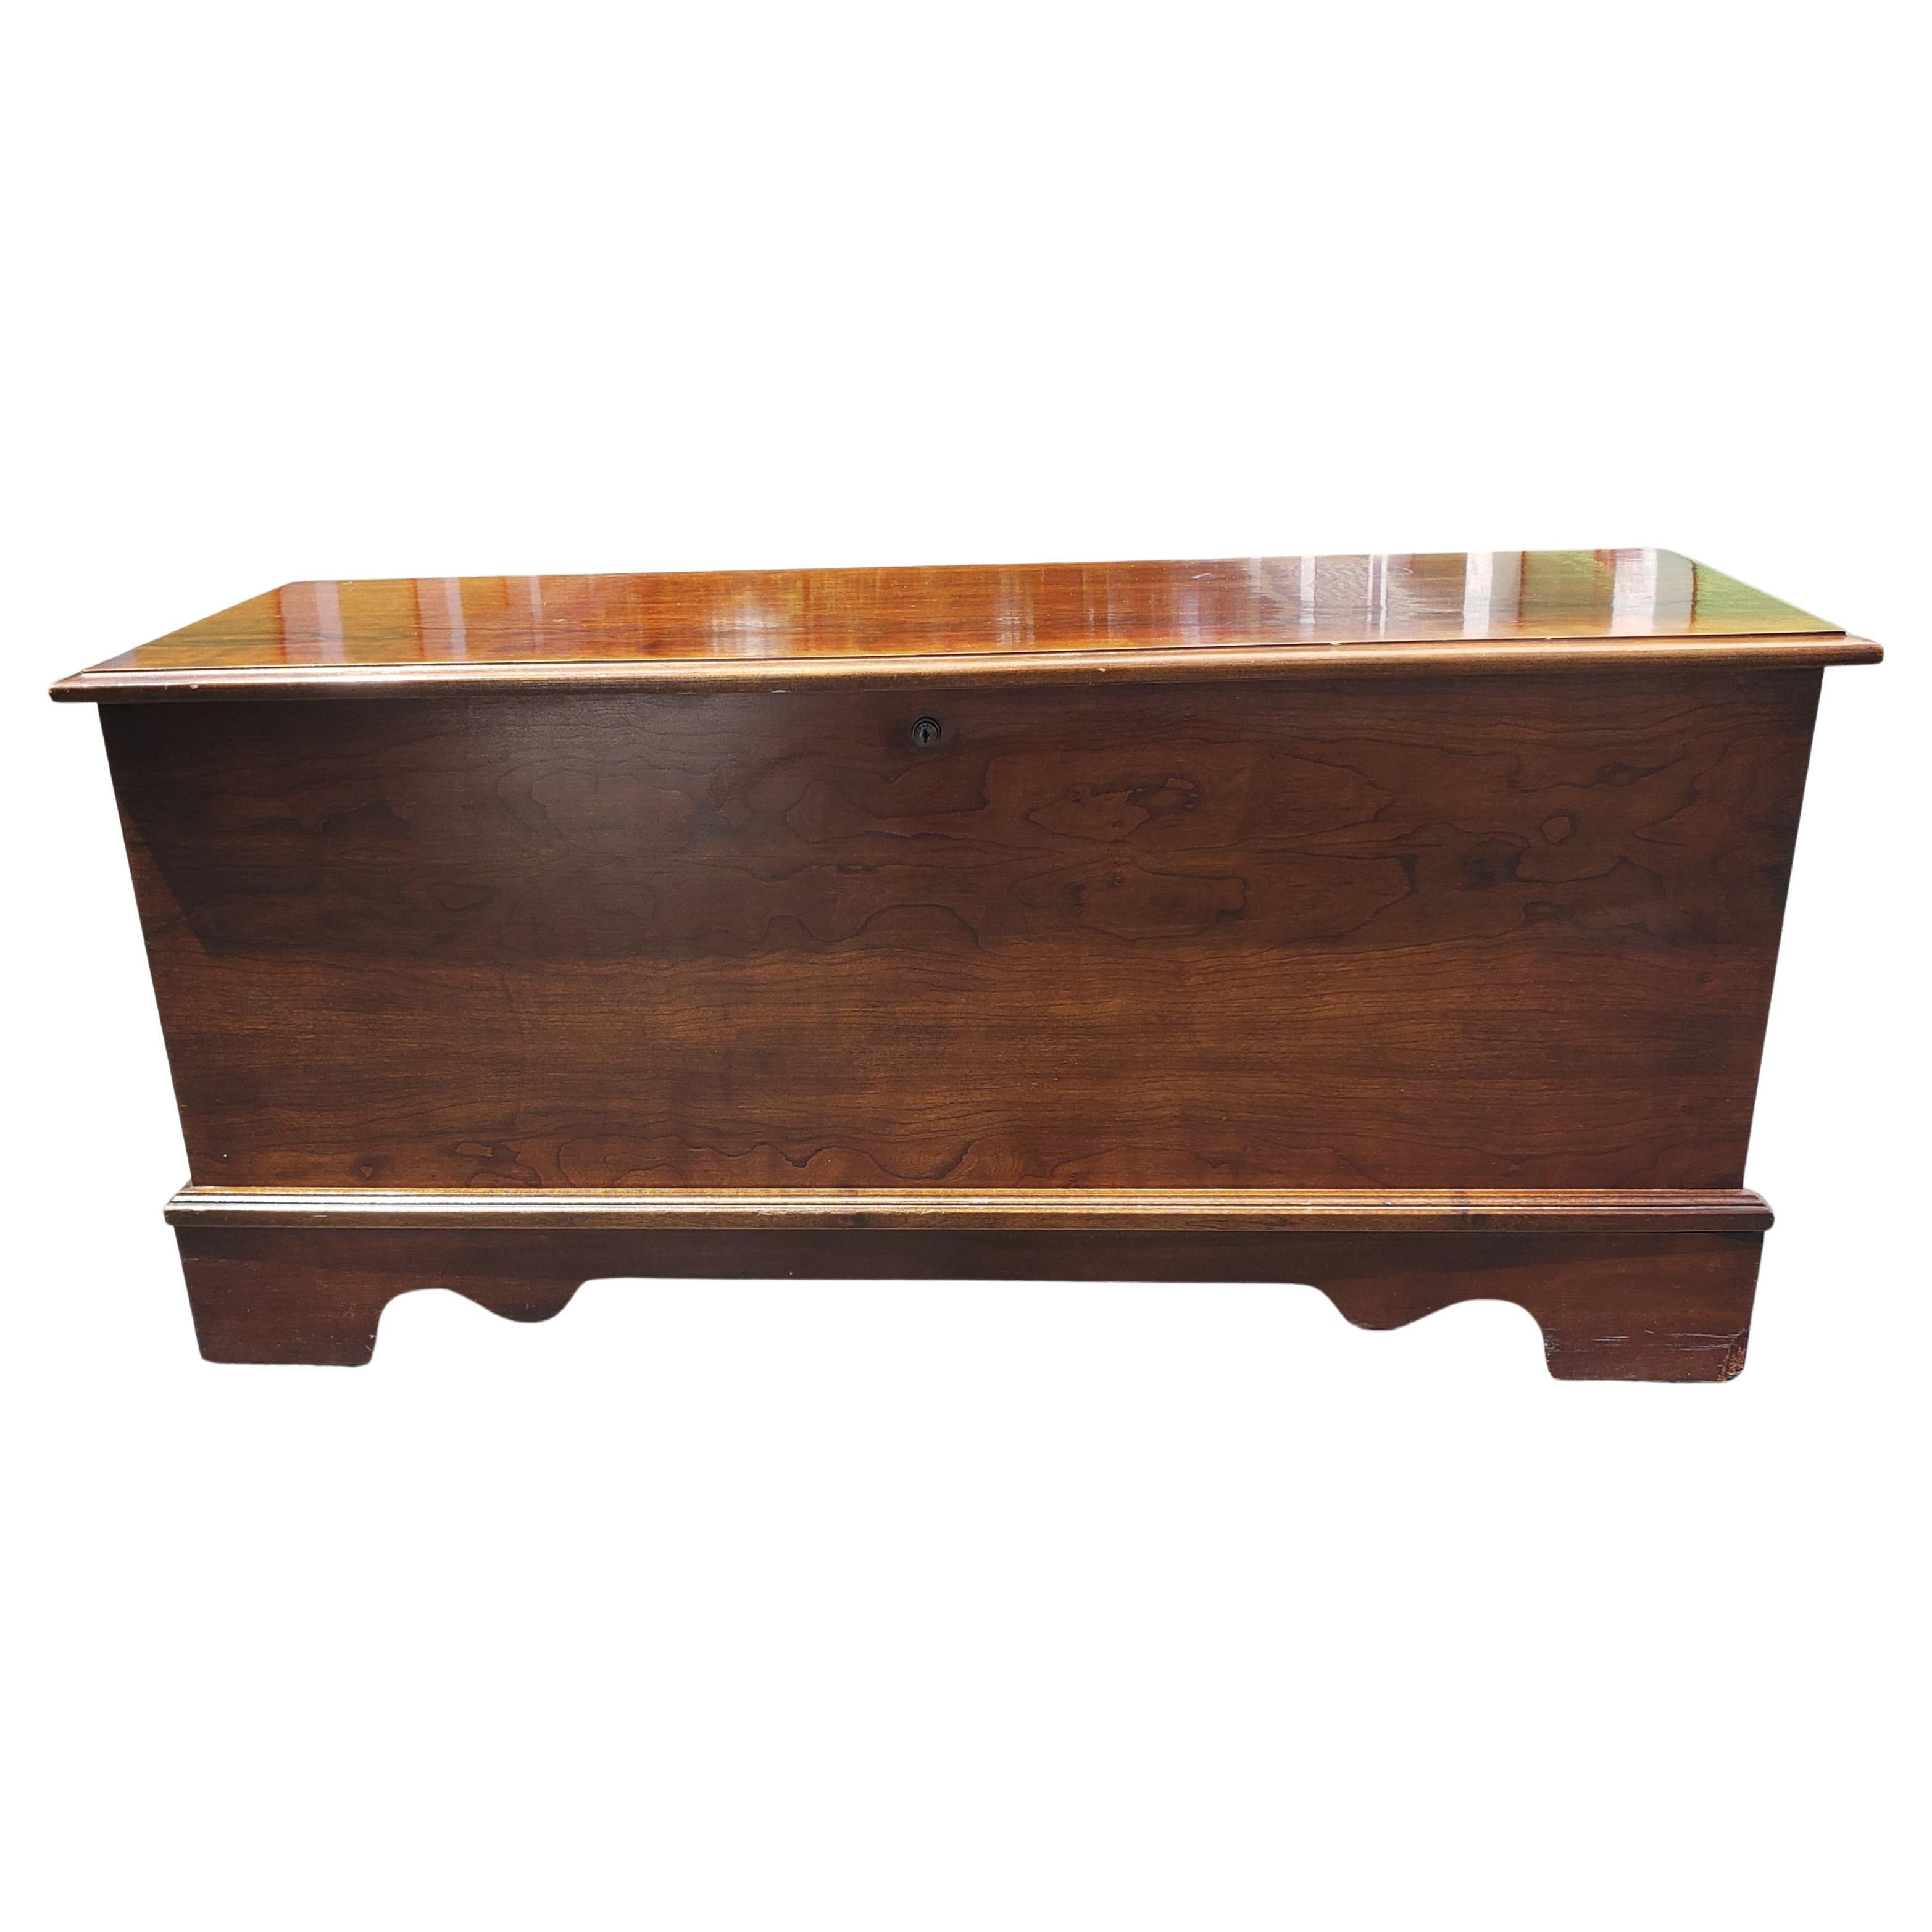 Lane Altavista mahogany blanket chest with cedar lining.
Good vintage condition. 
Measures 48